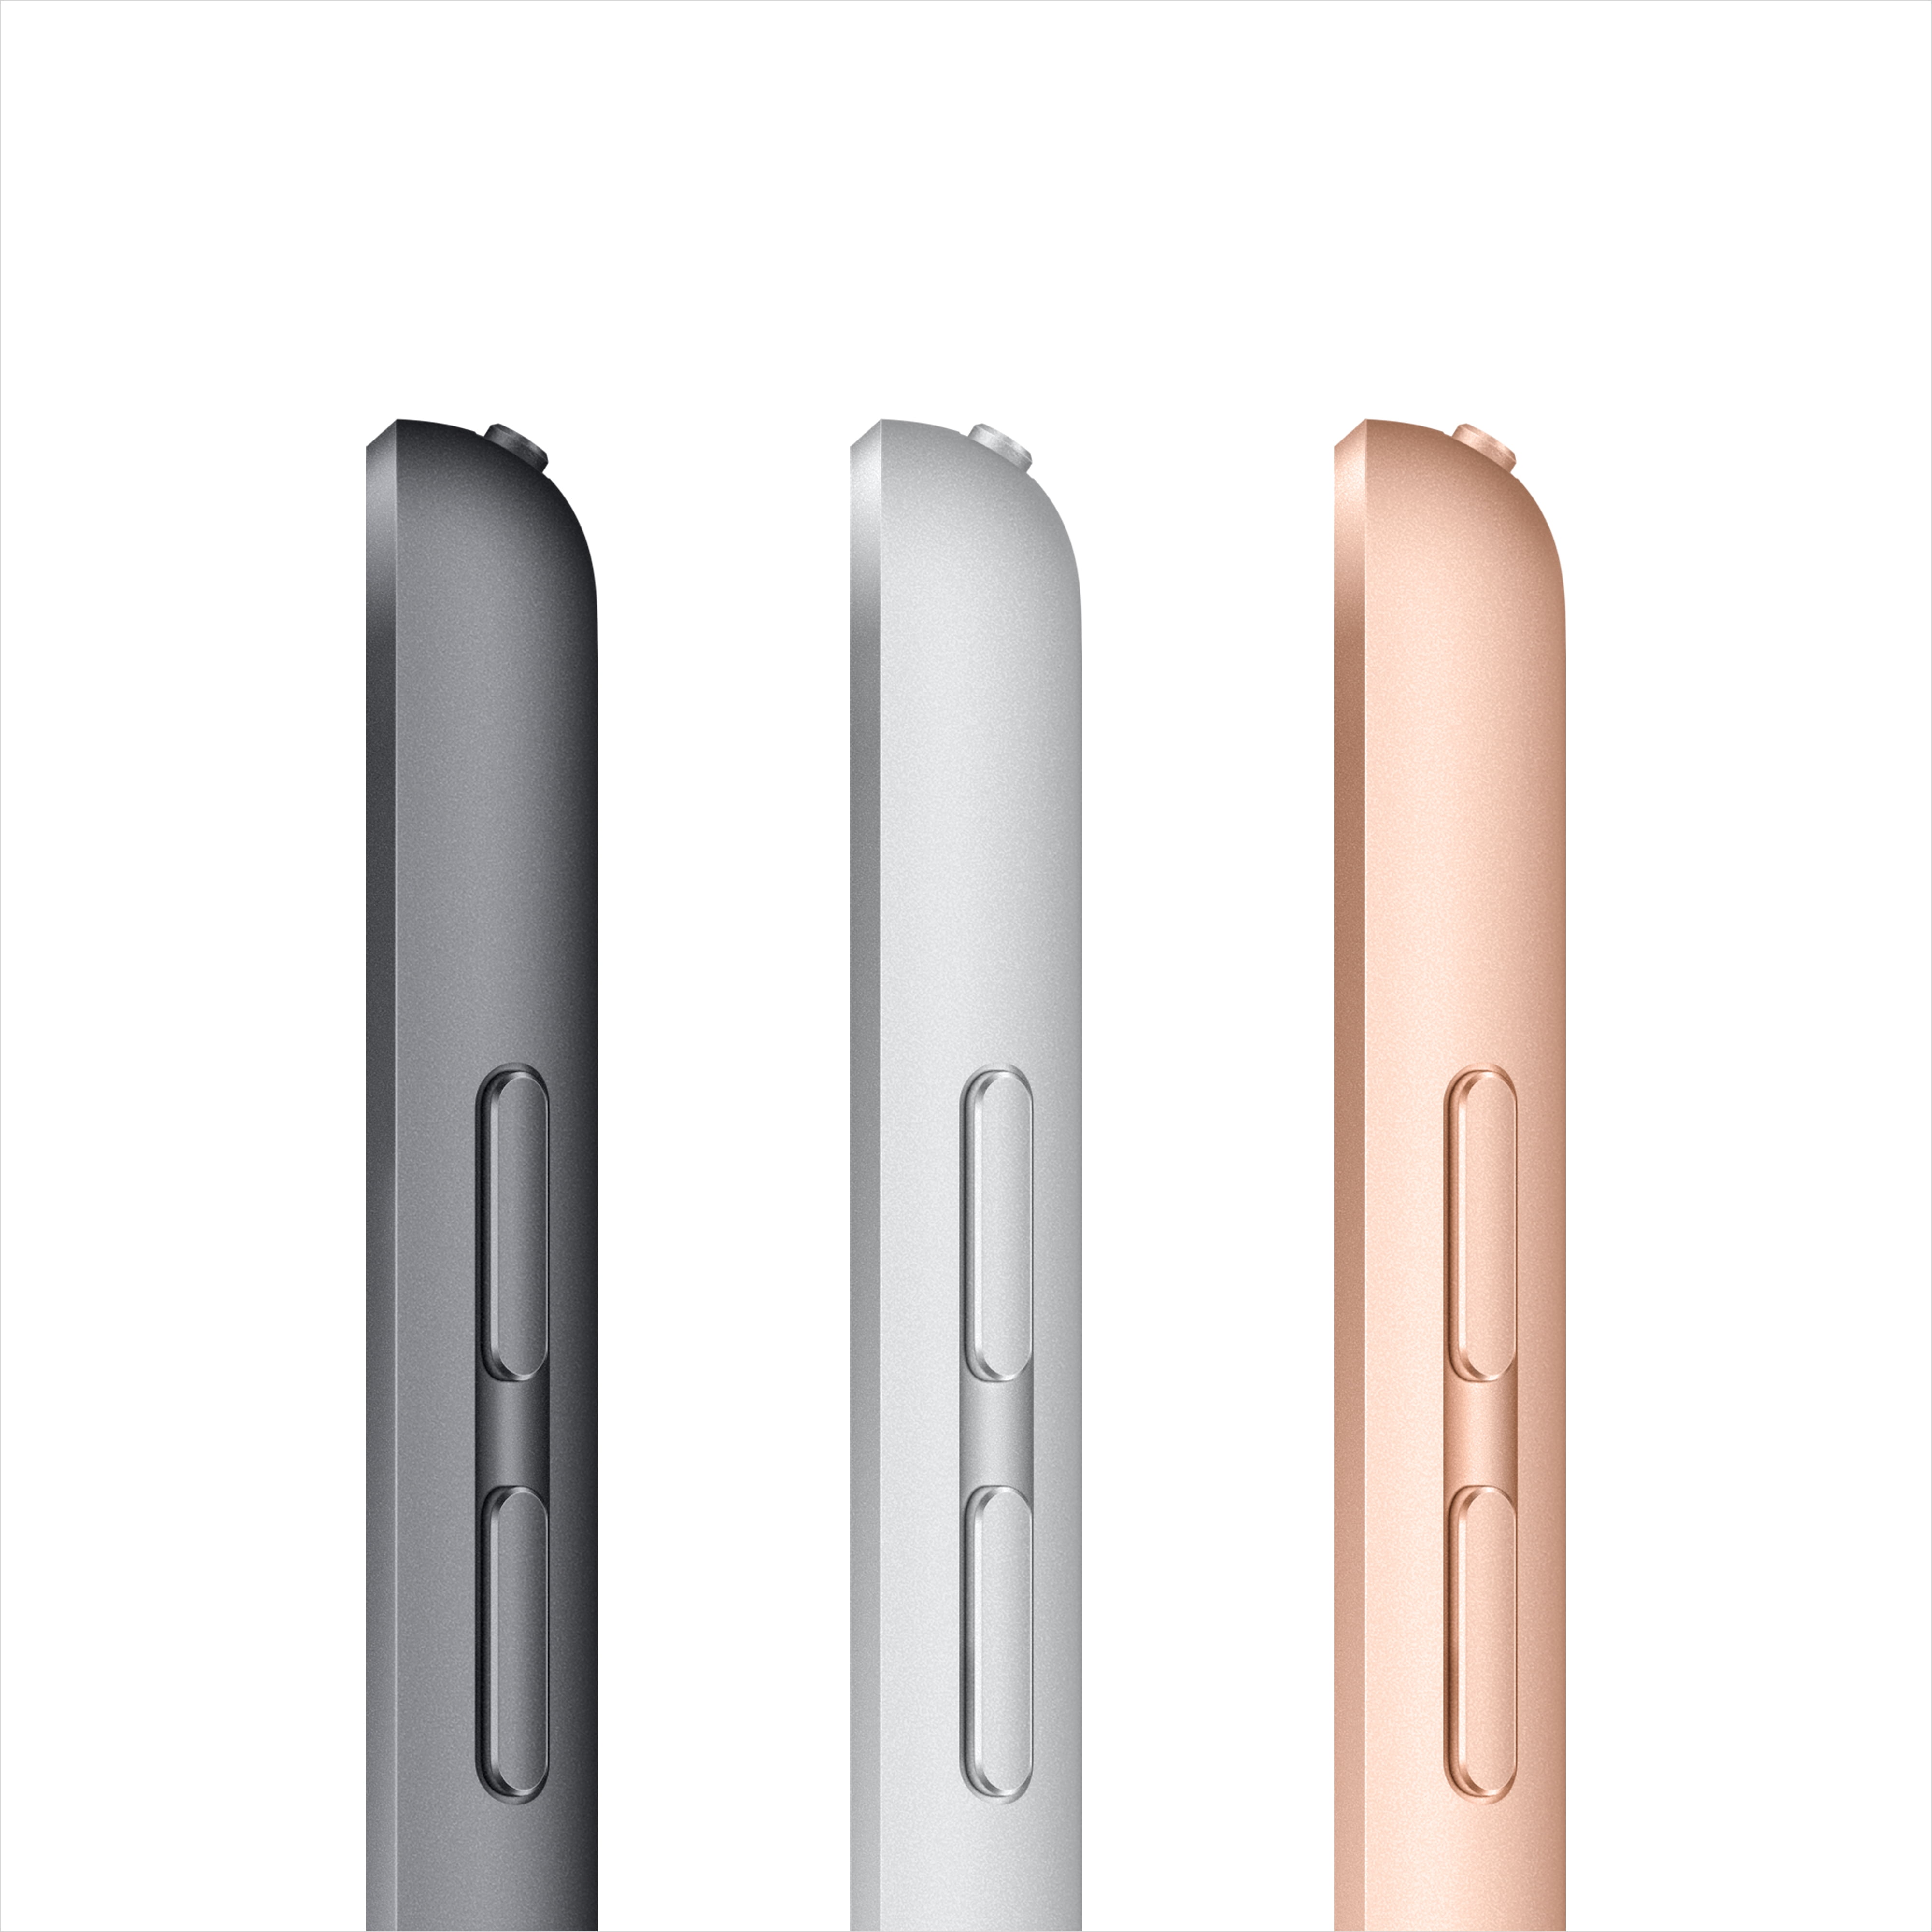 Apple iPad (10.2-inch, Wi-Fi, 32GB) - Gold (Latest Model, 8th Generation)  (Renewed)